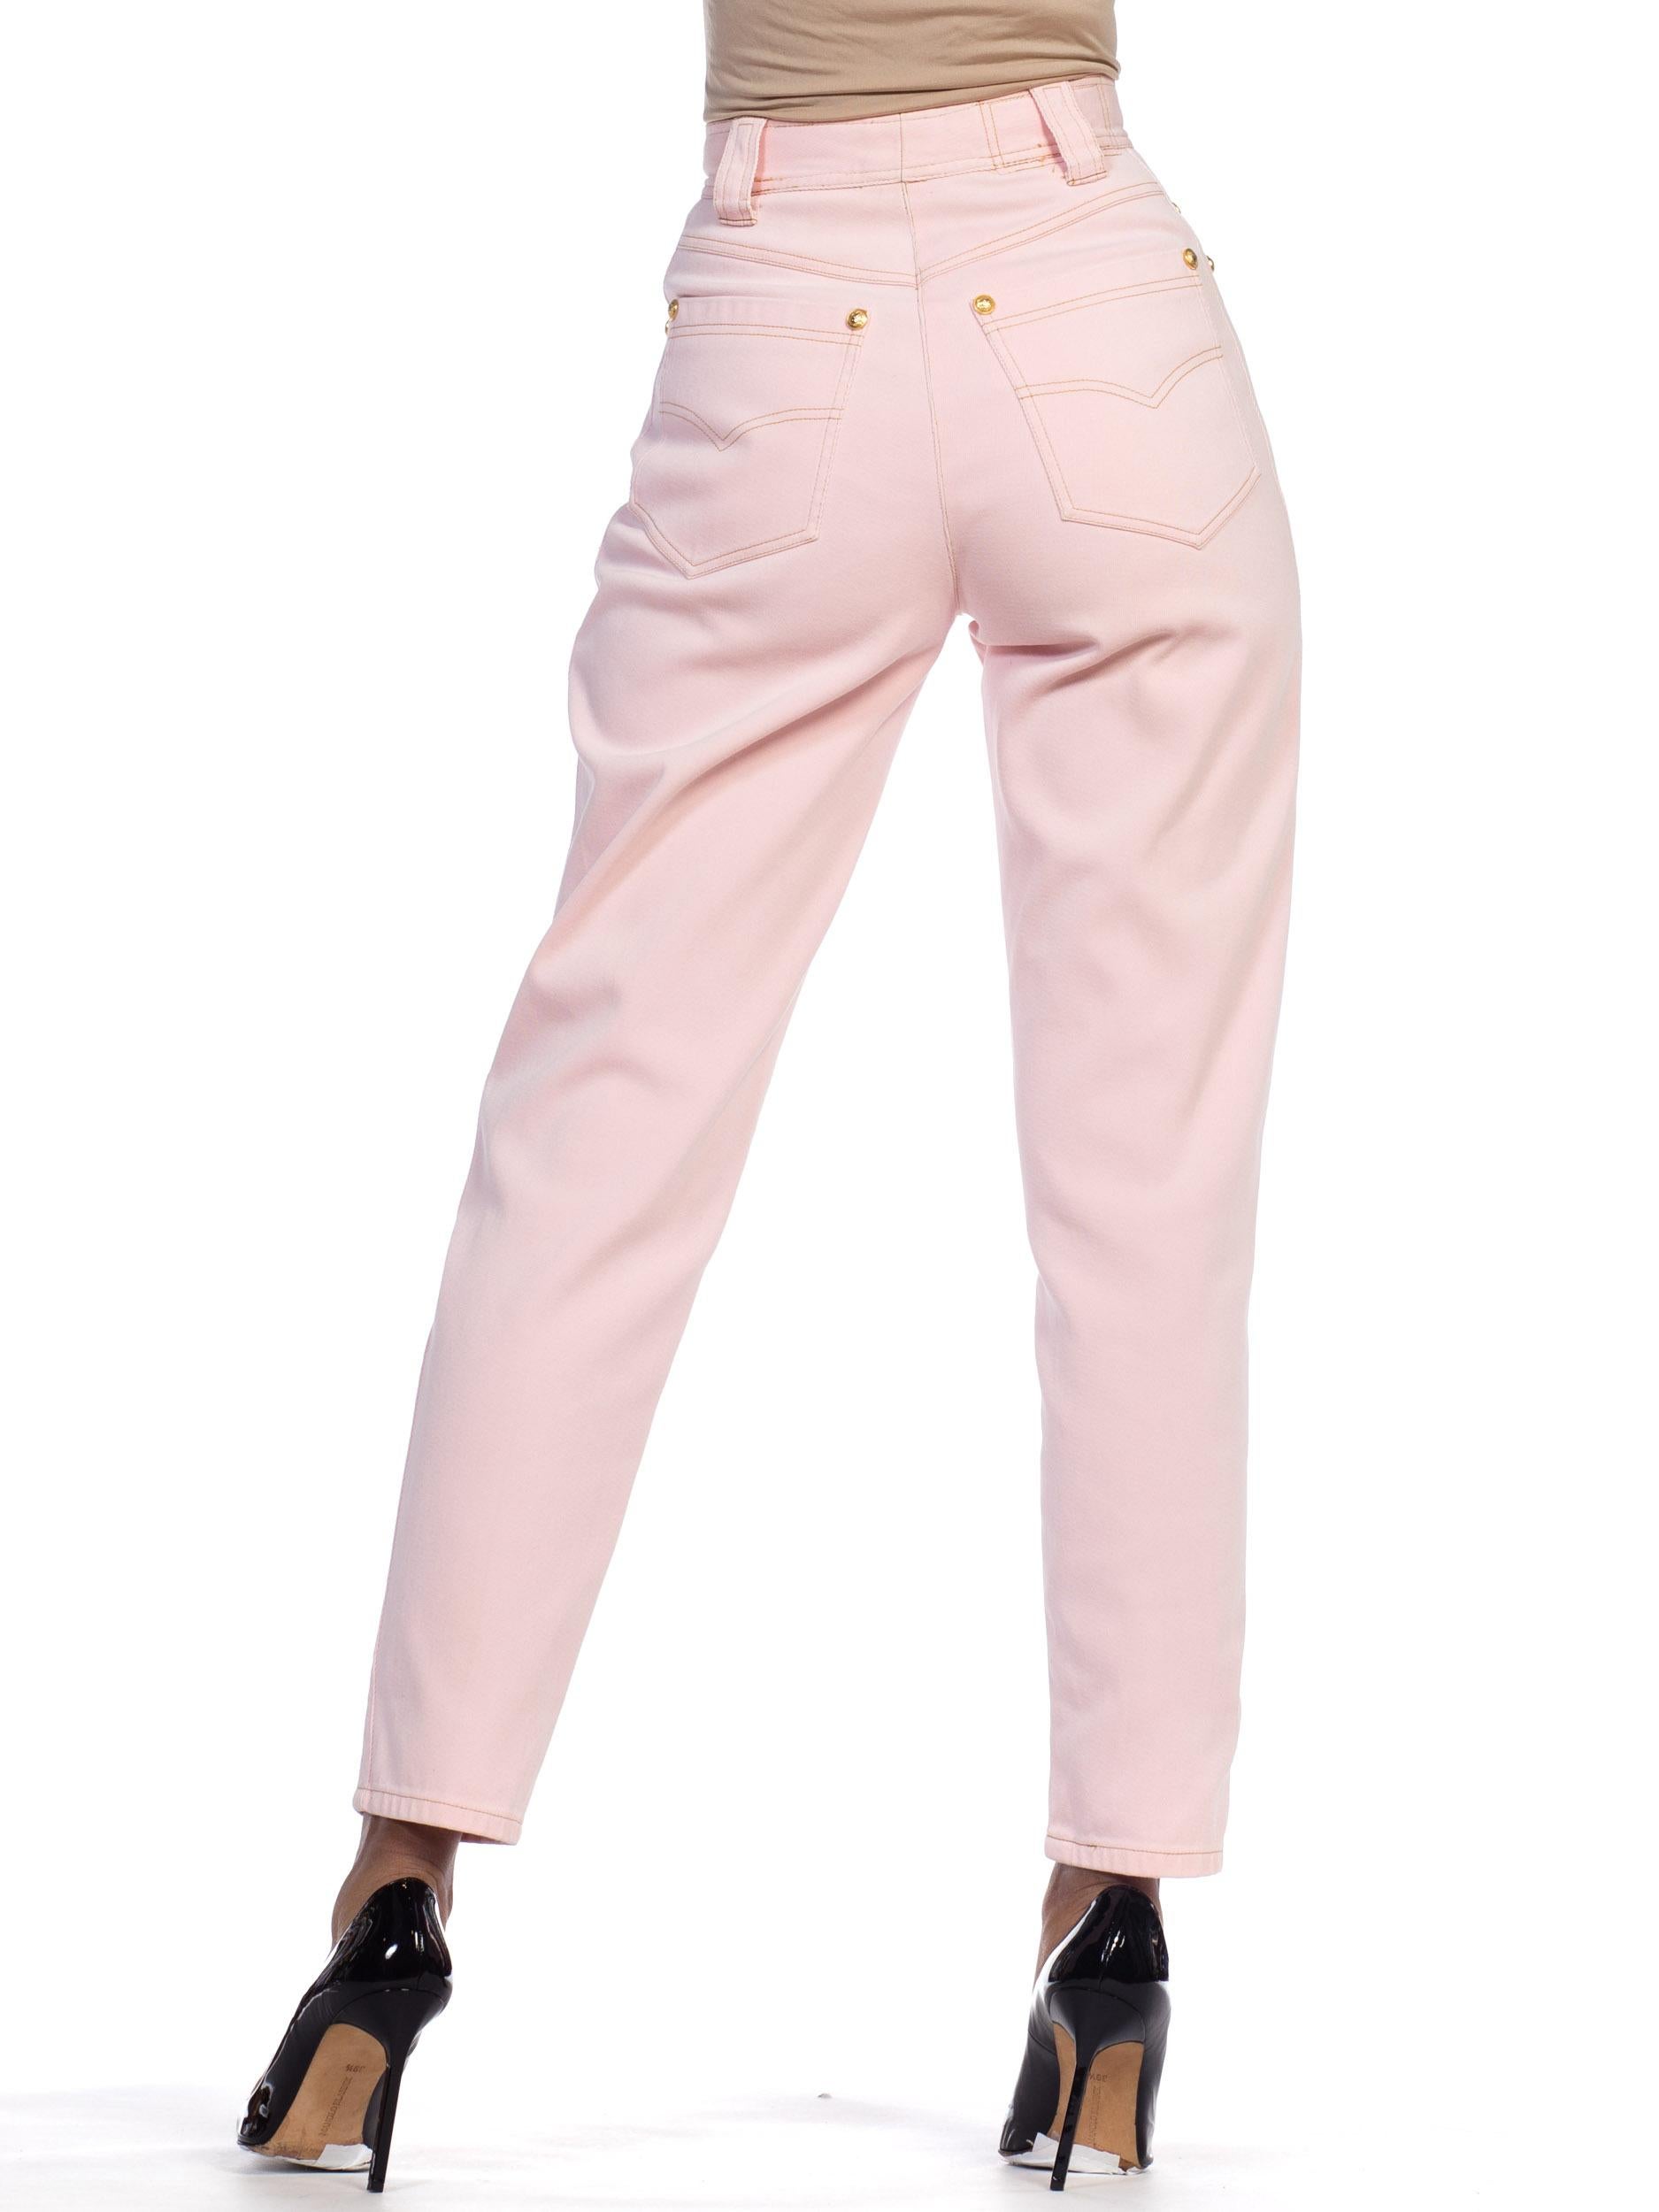 Women's 1990s Gianni Versace Pastel Pink Denim Jacket & Jeans